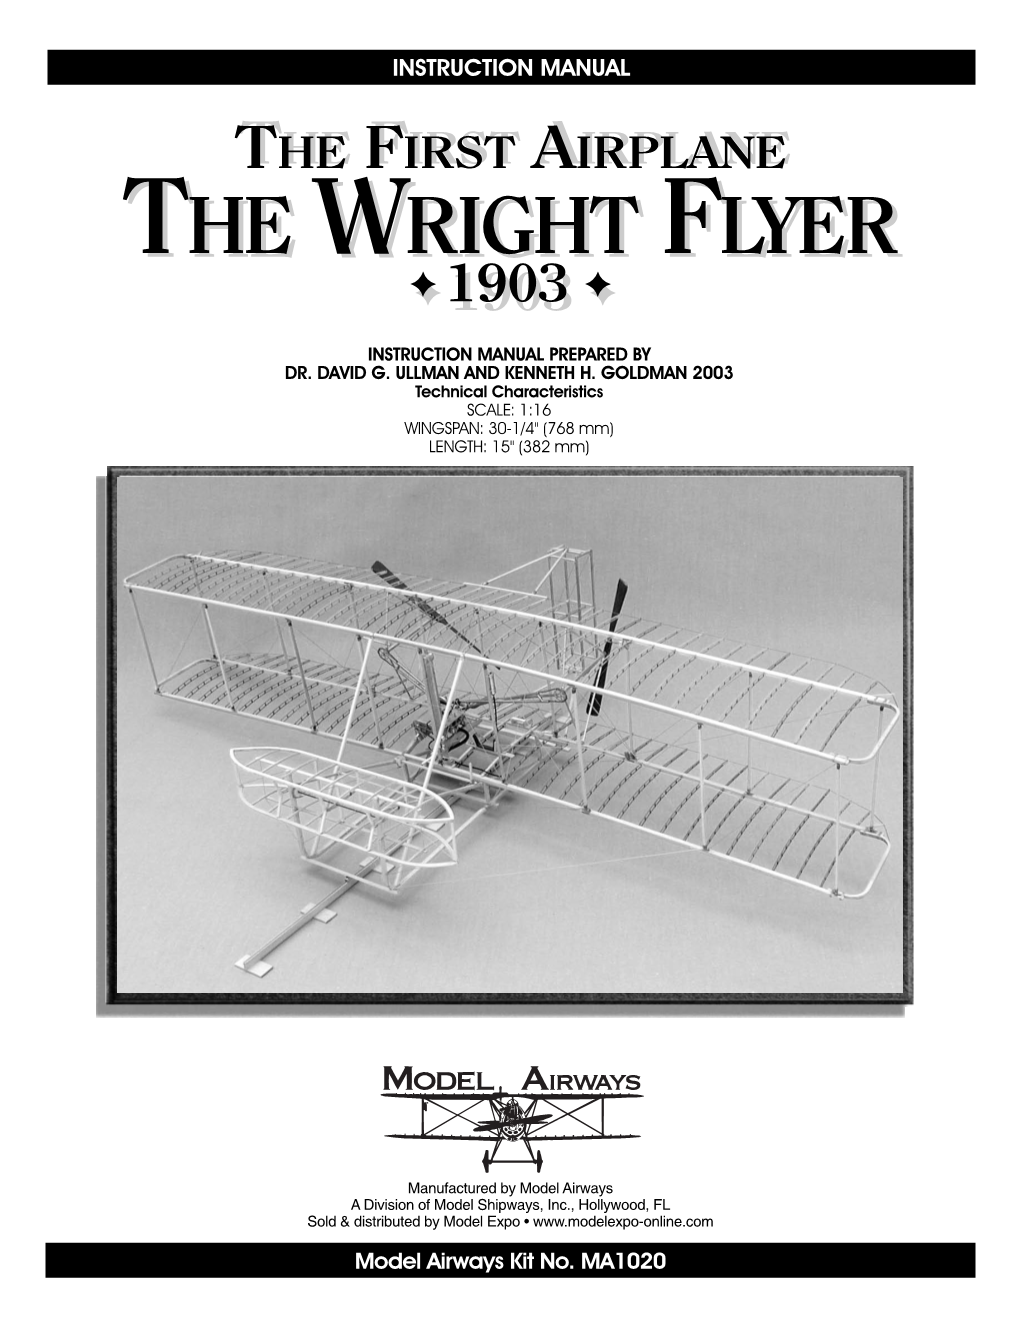 Model Airways Wright Flyer Instruction Manual